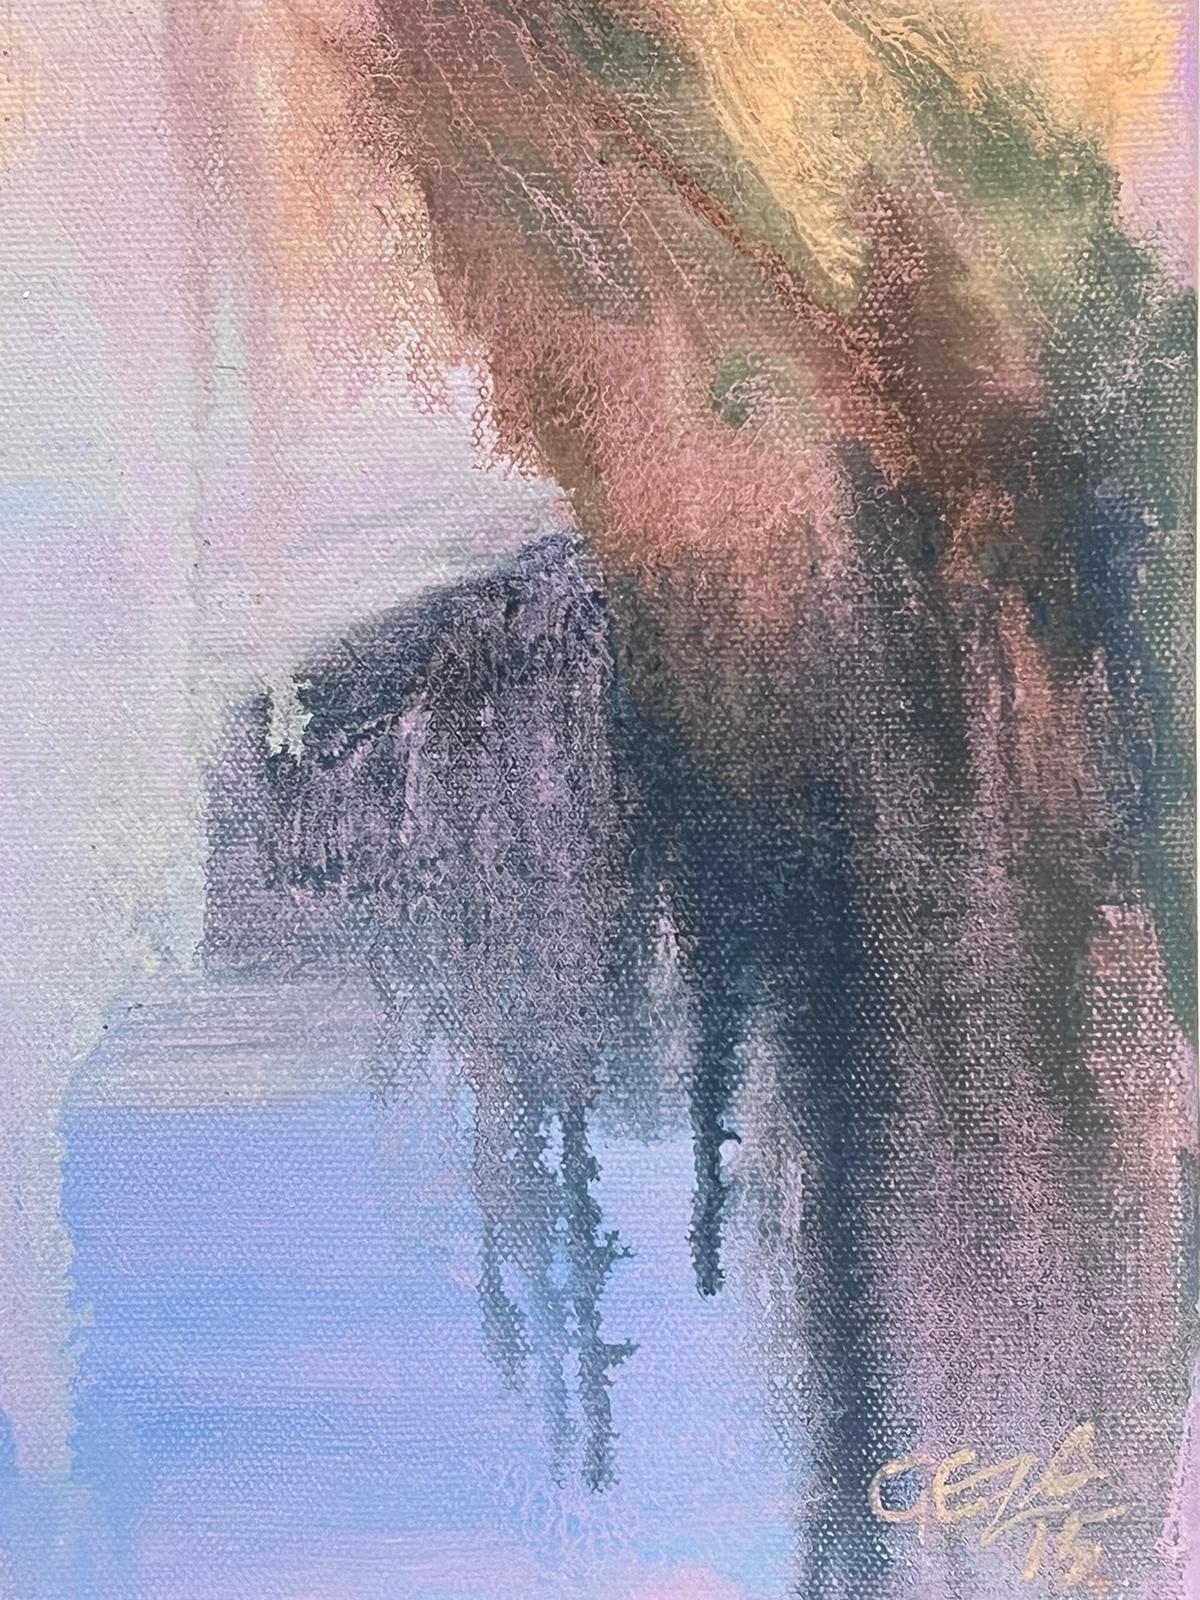 blurry landscape painting